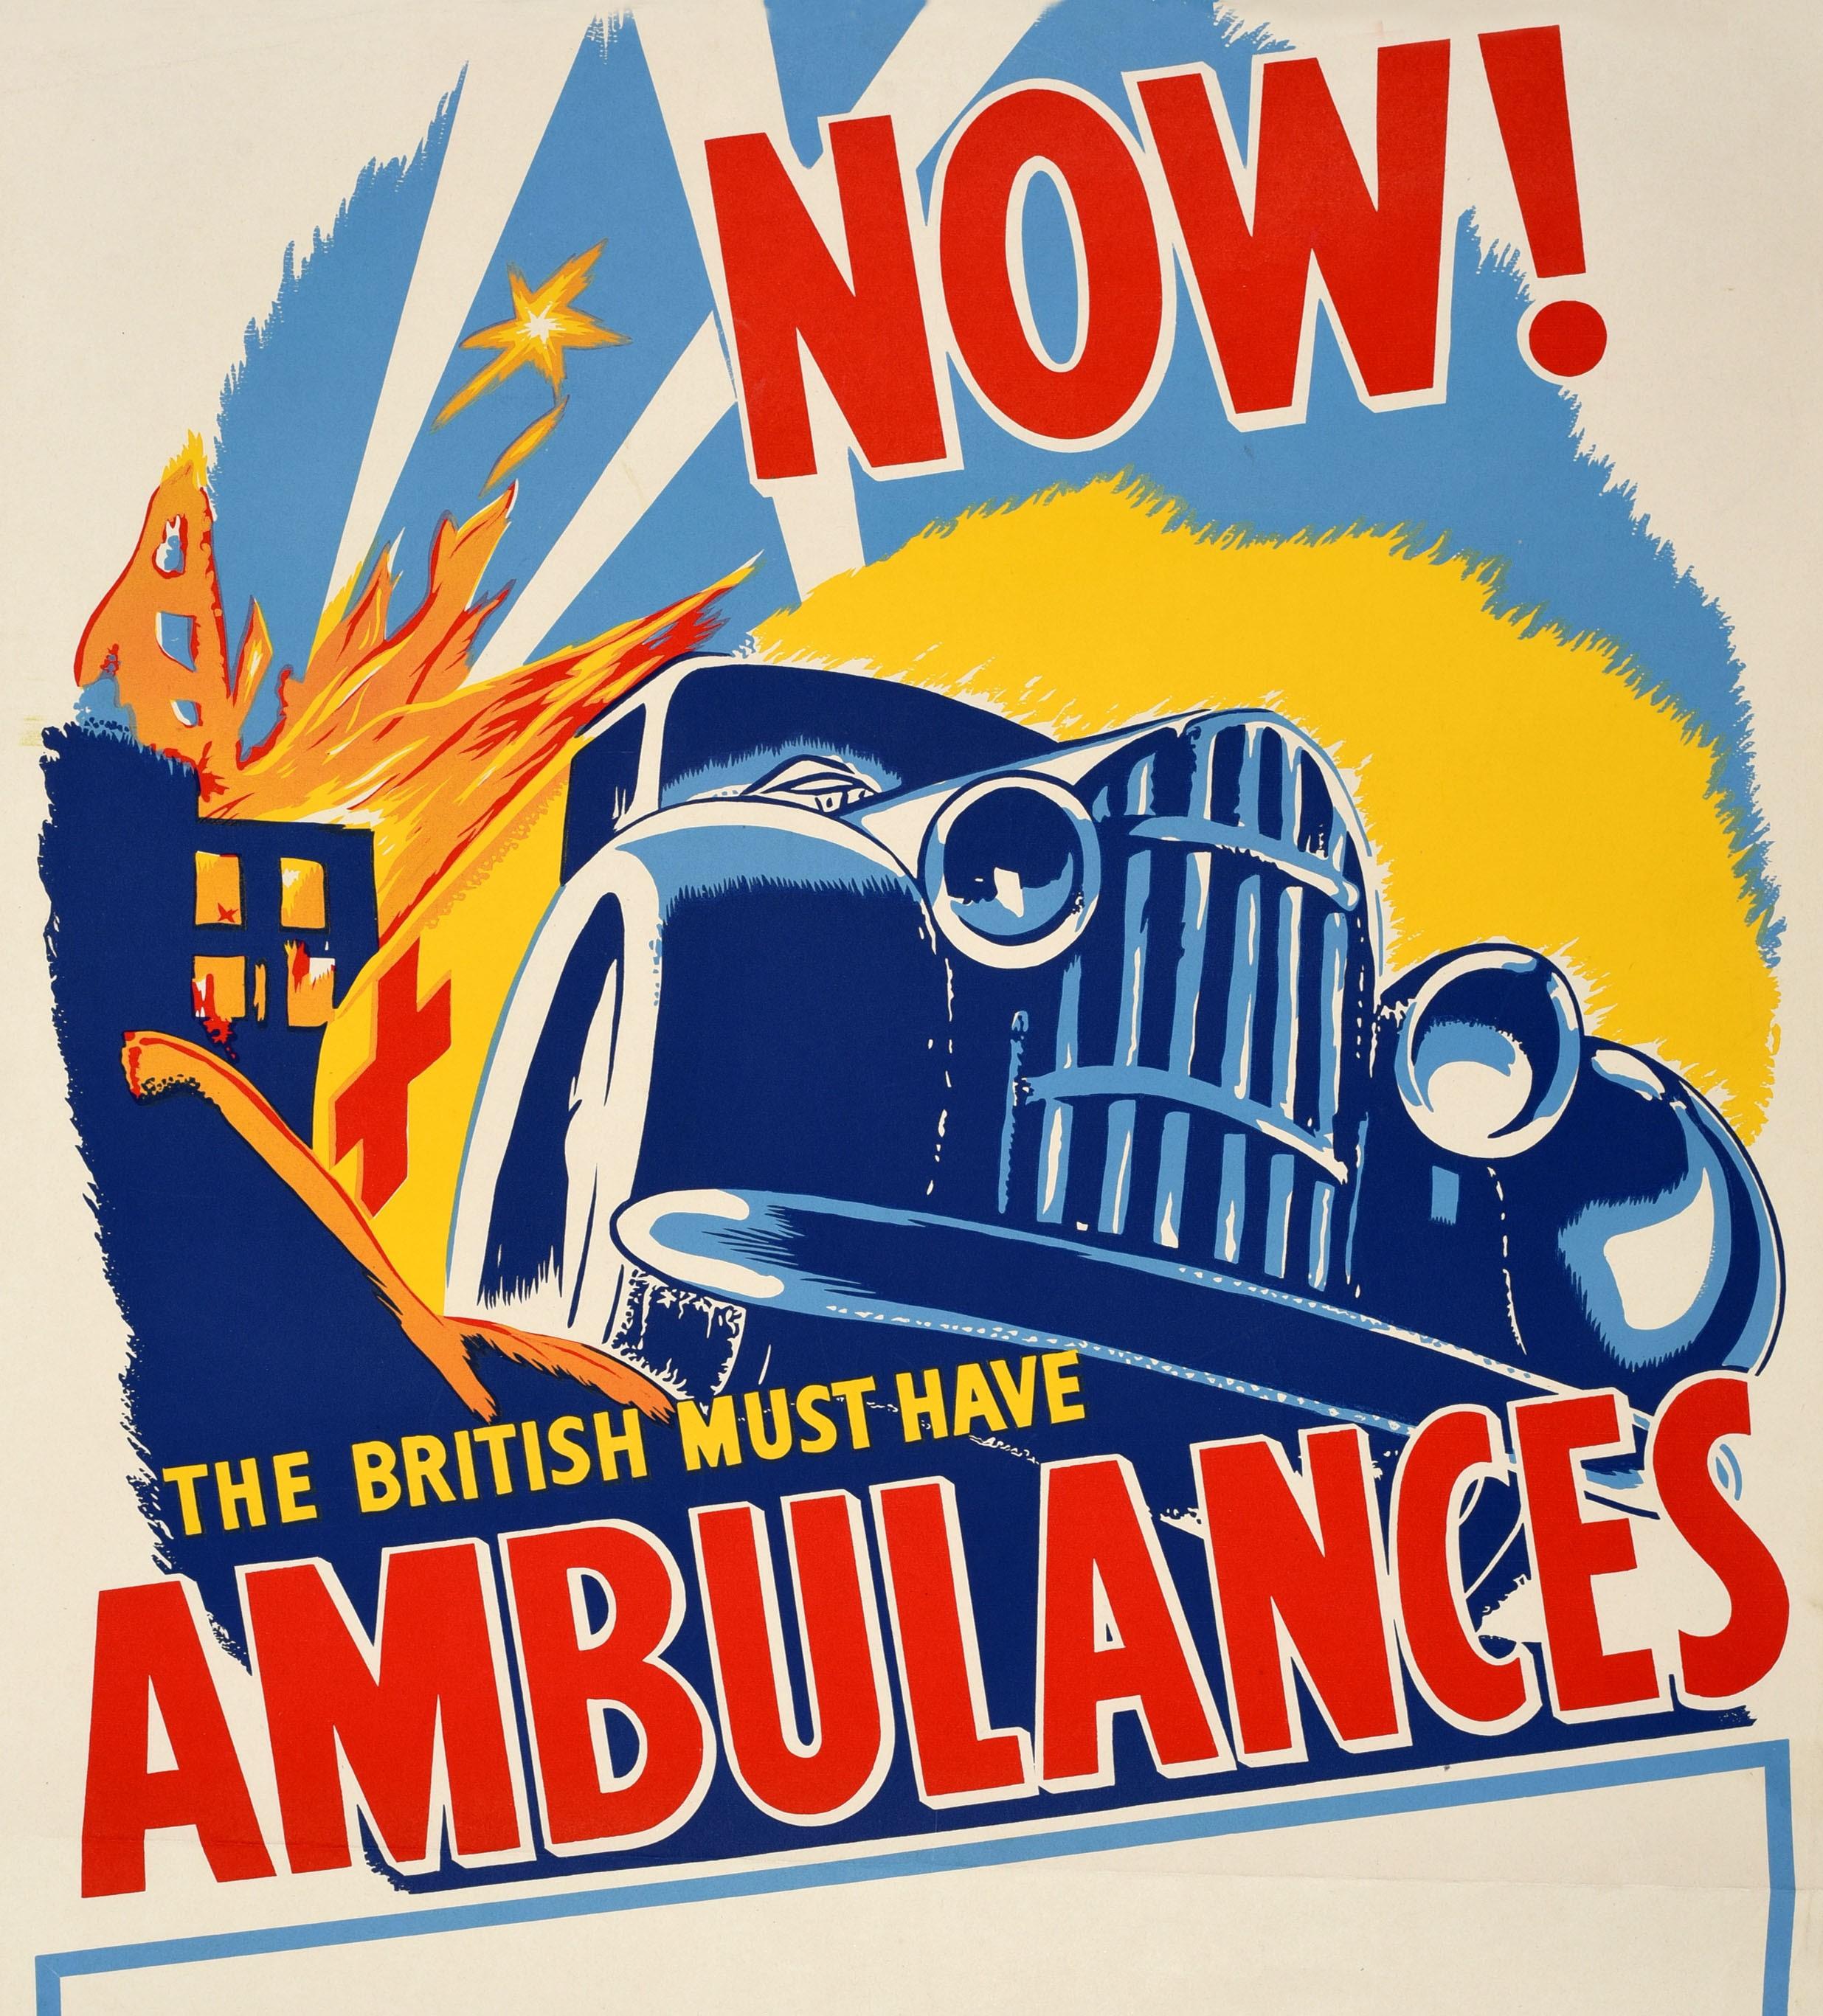 1960s ambulance for sale